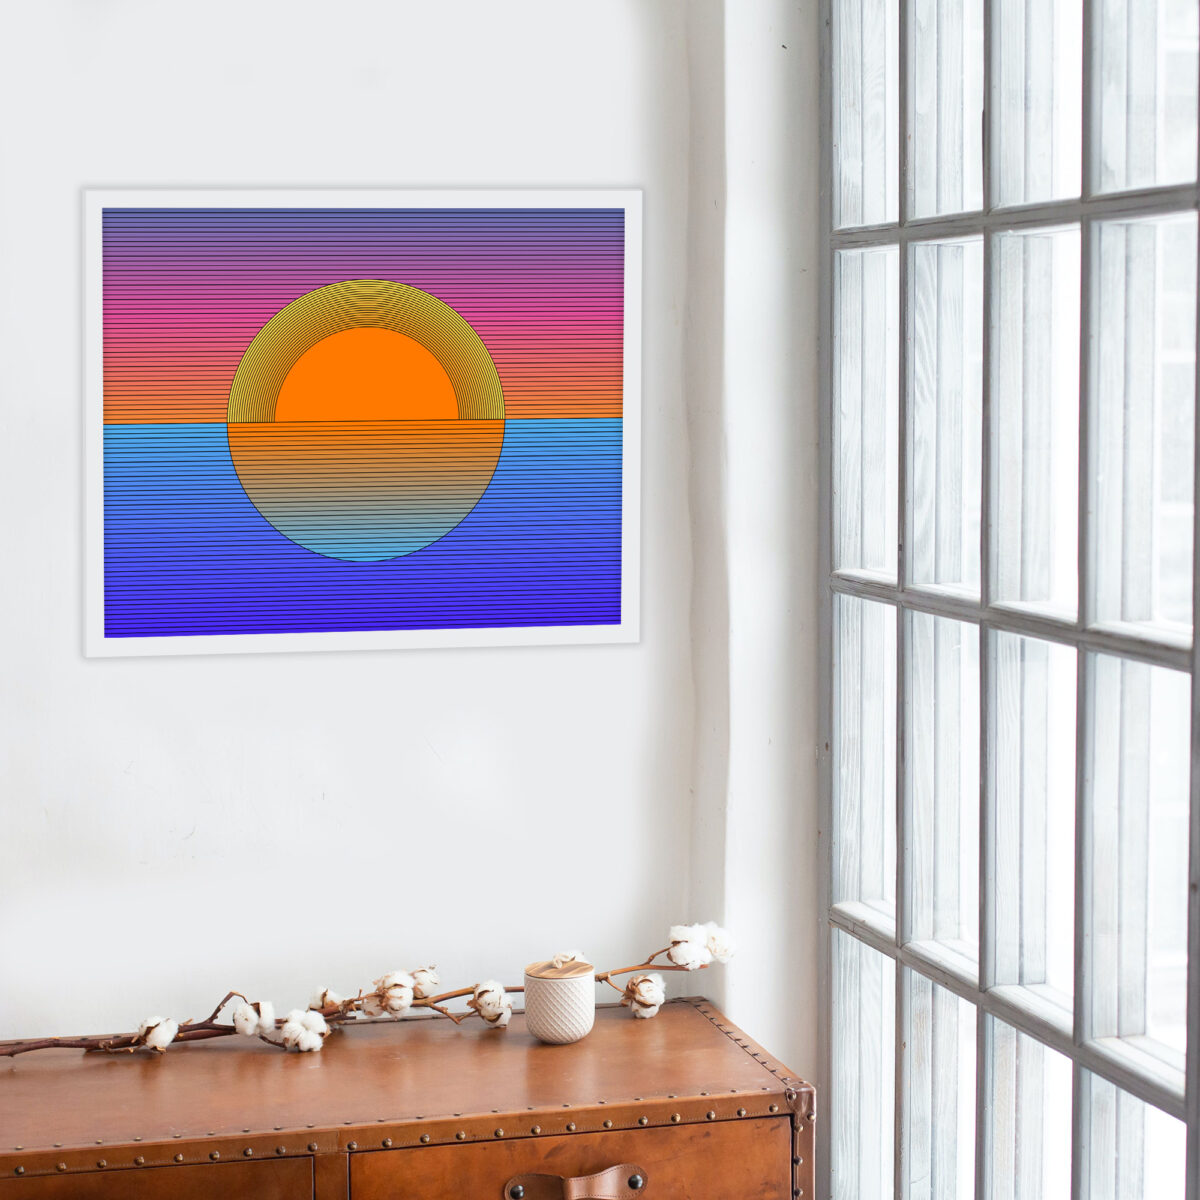 White framed Sunset art print hanging on a wall